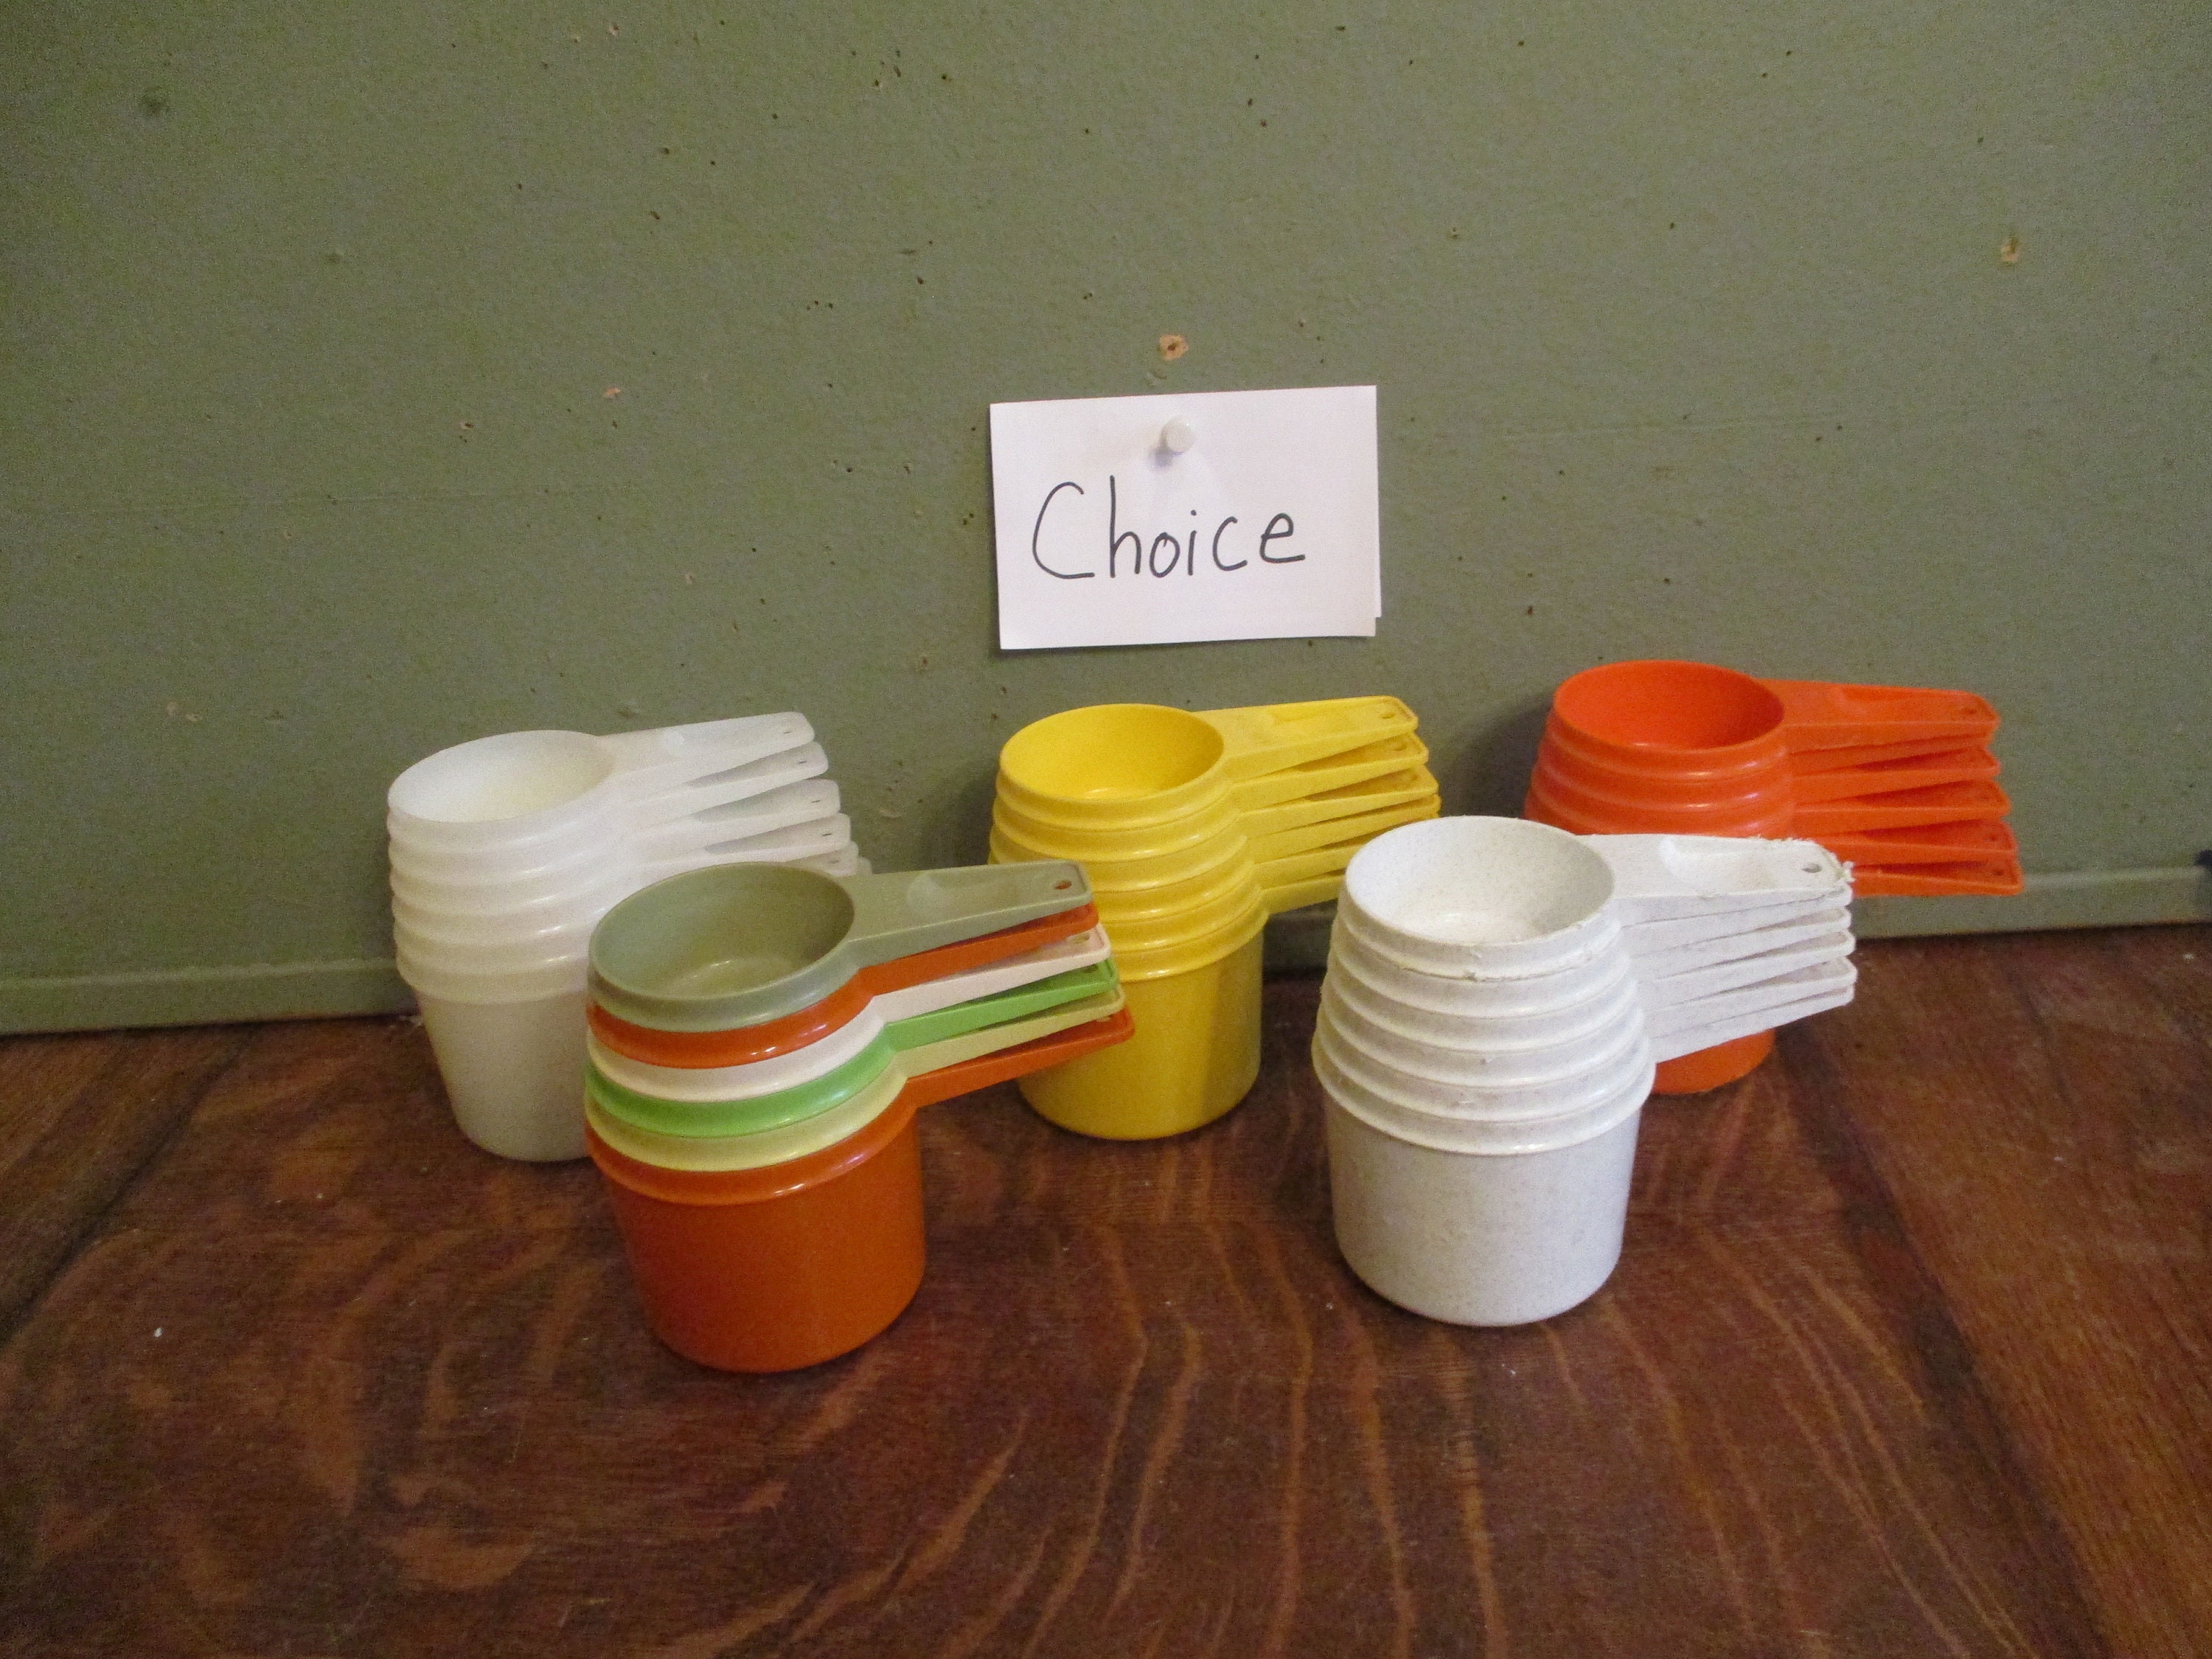 Retro Plastic Measuring Spoons, Orange, Red, White and Green